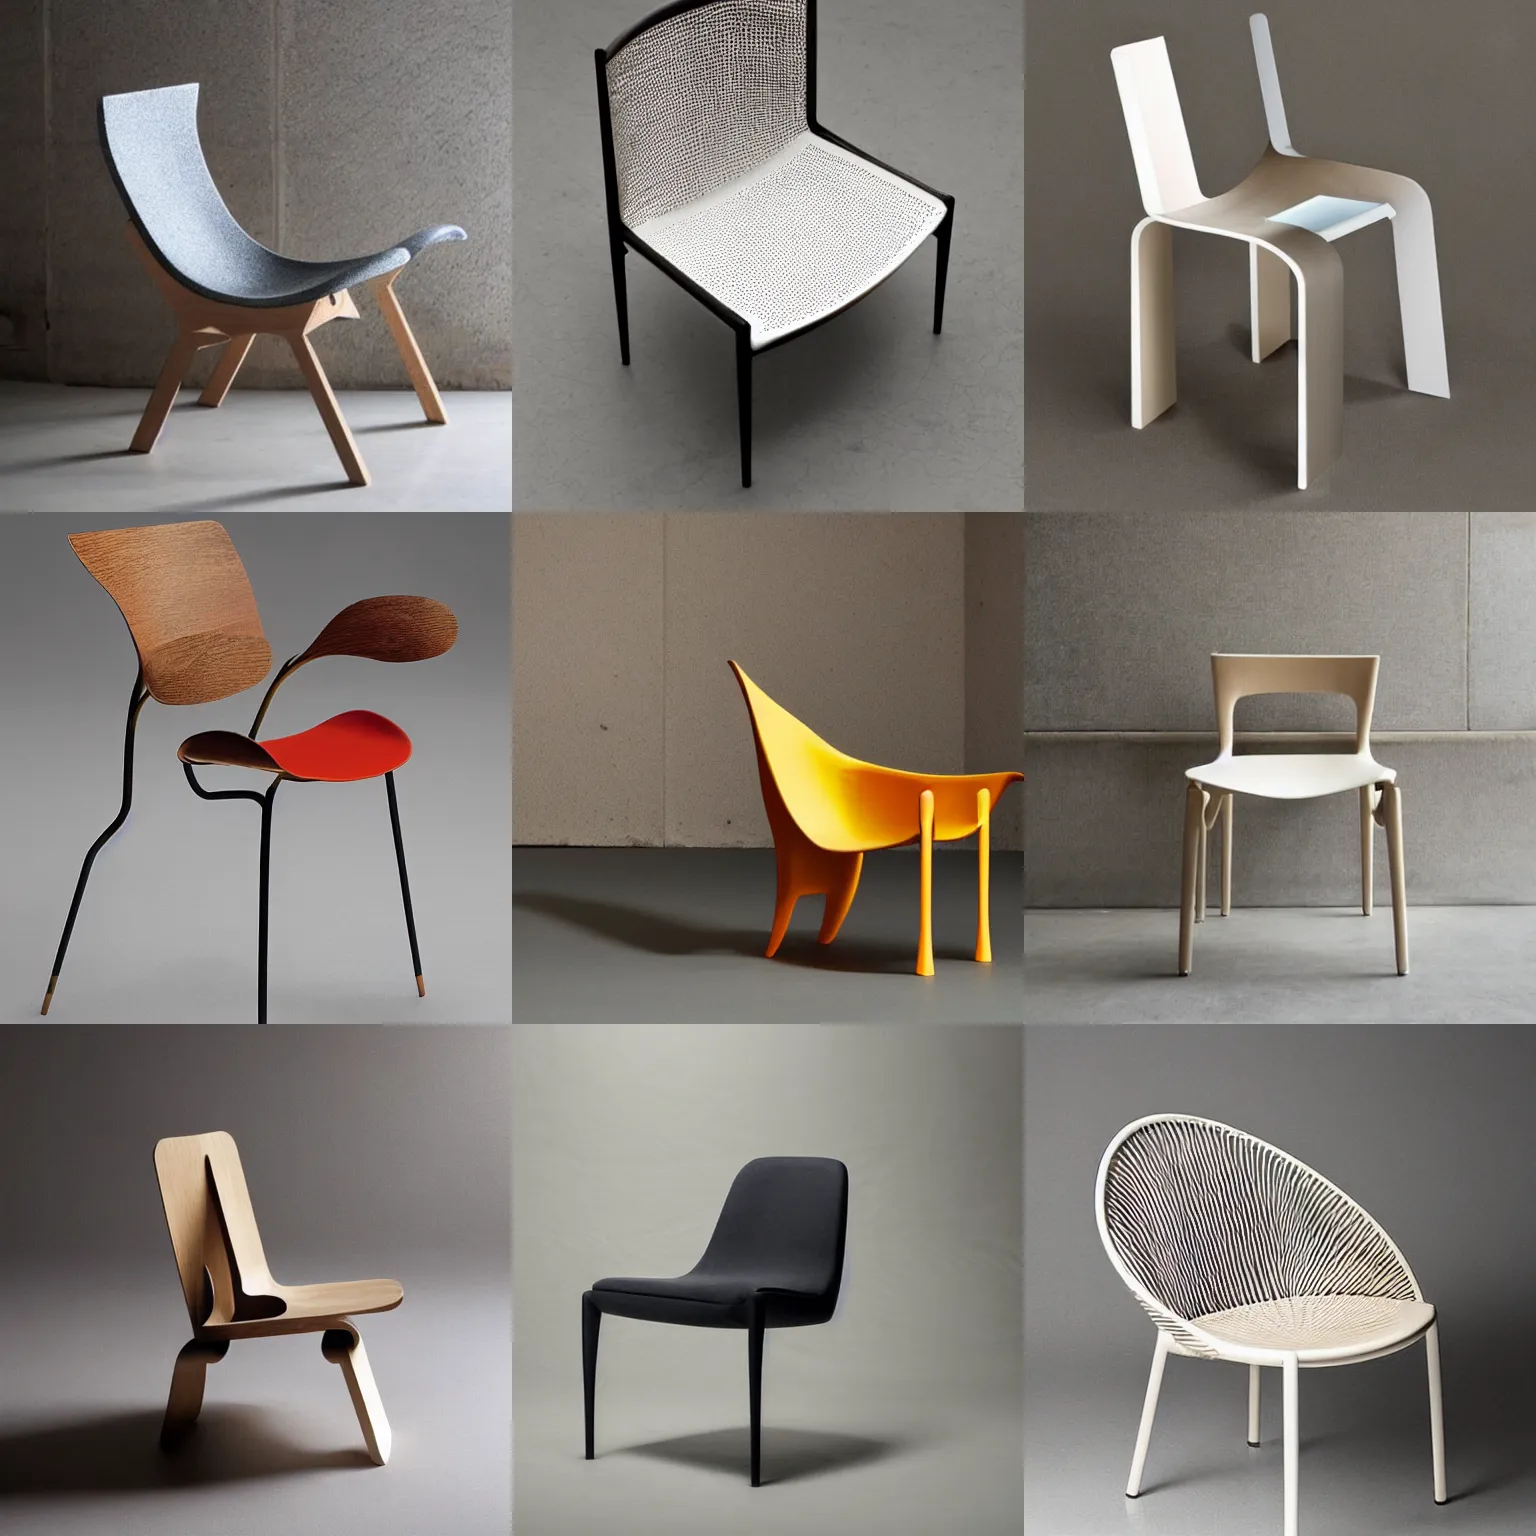 Prompt: a beautiful chair designed by naoto fukasawa design